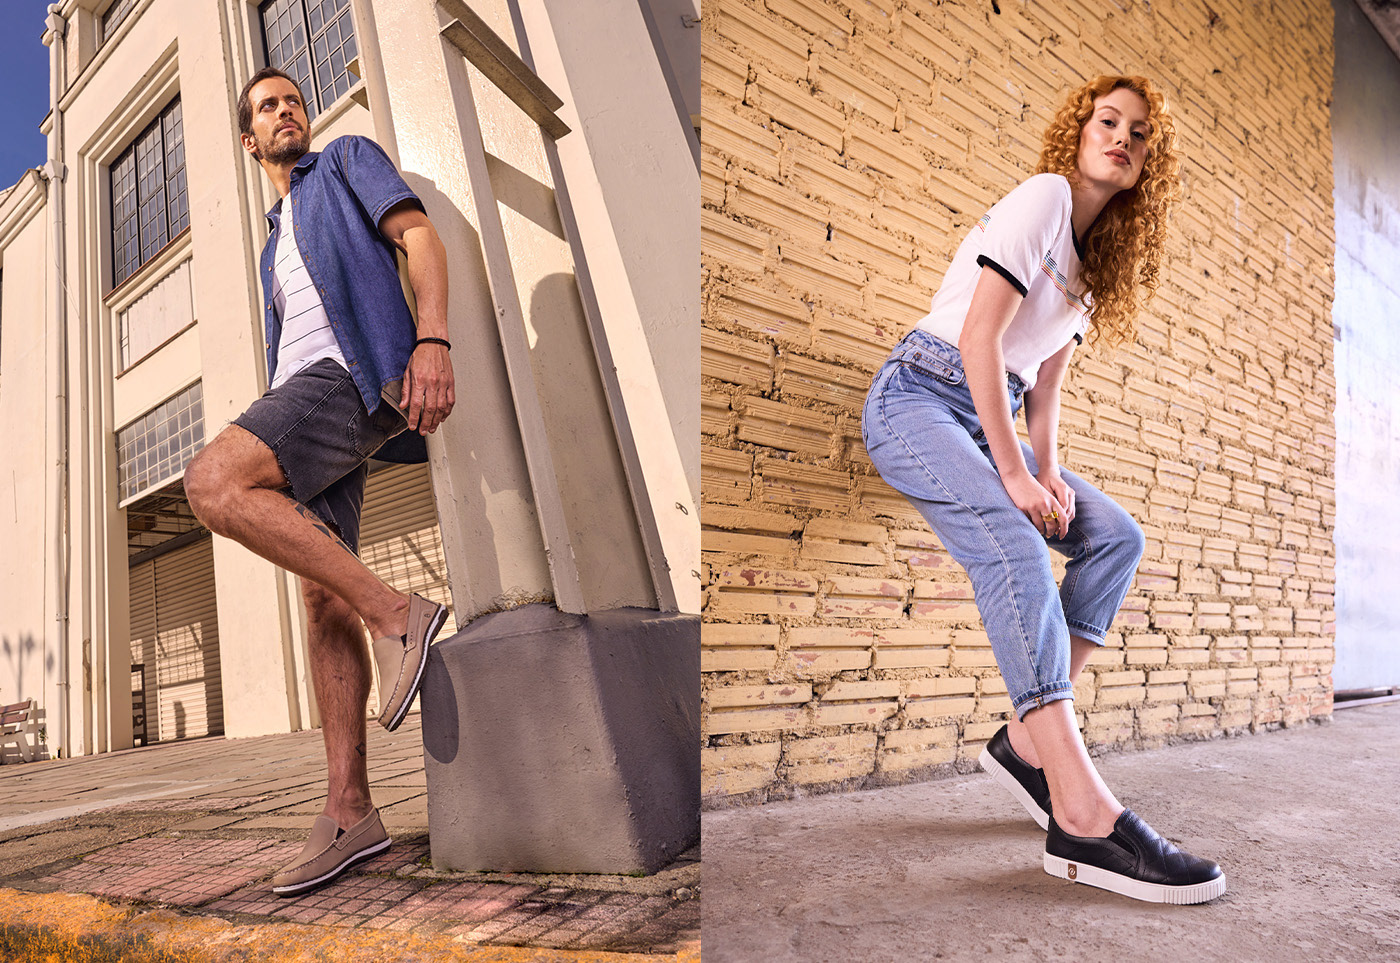 Pegada shoes design moda campanha Socialmedia summer